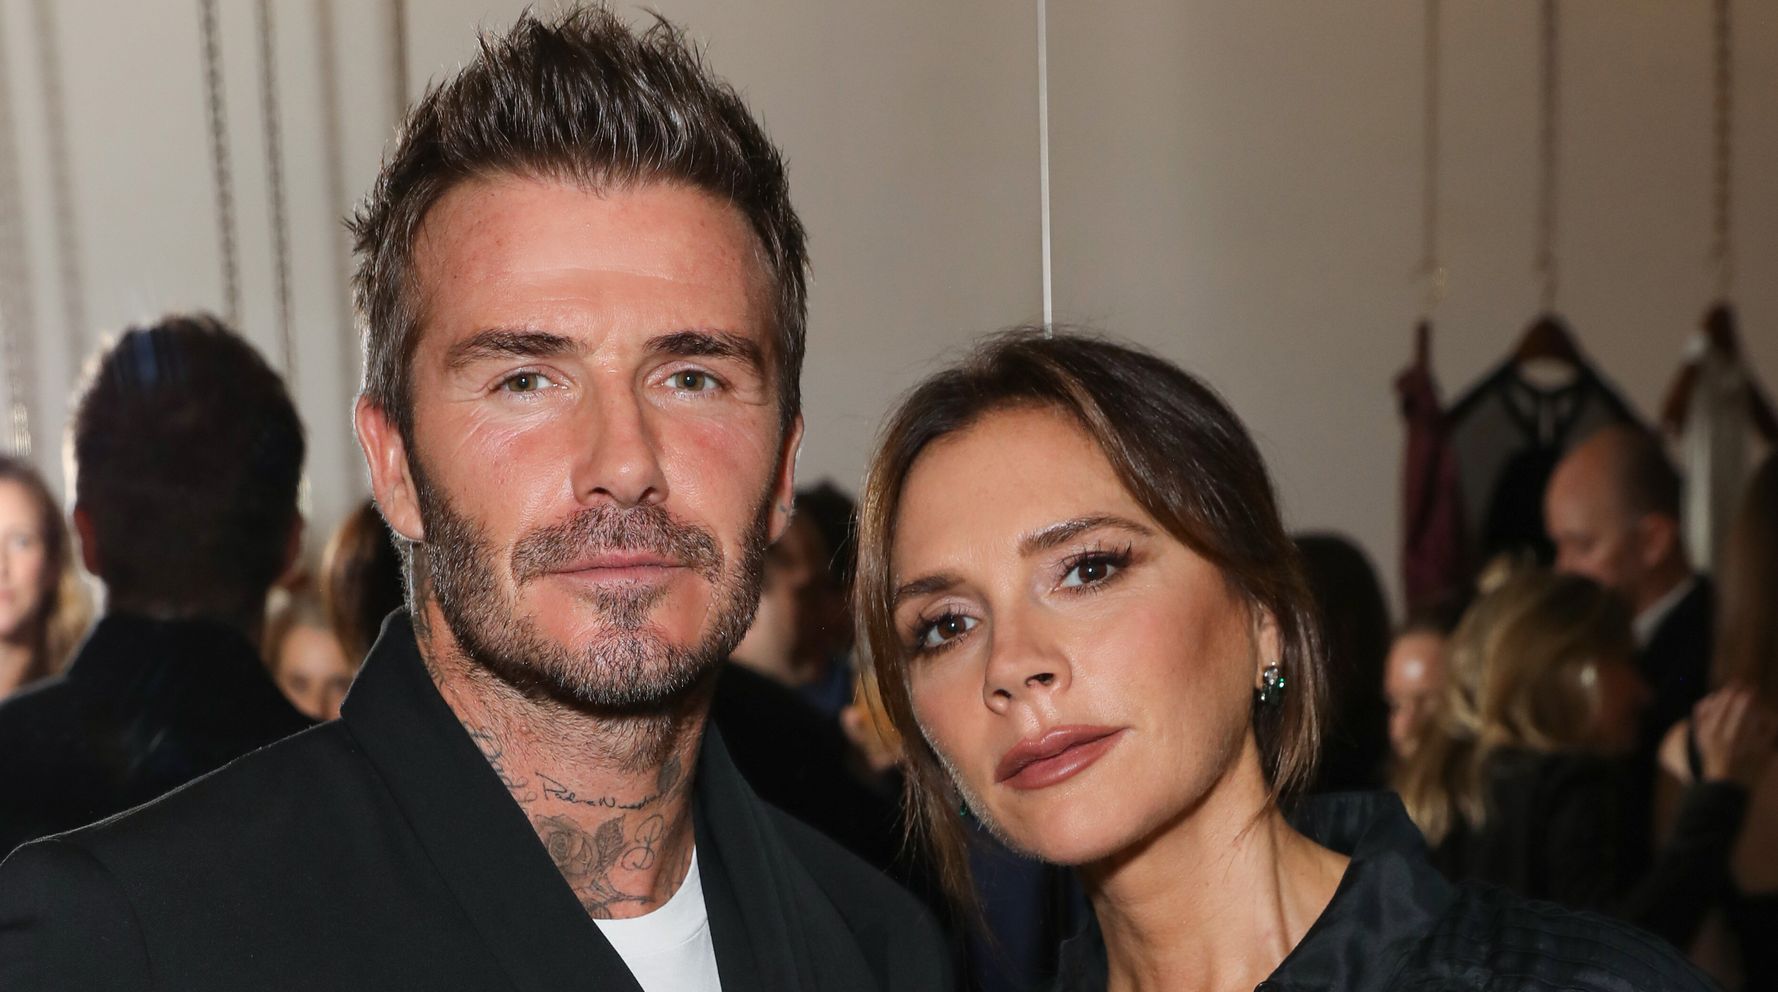 Victoria Beckham Pokes Fun At Critics In Sweet Anniversary Post